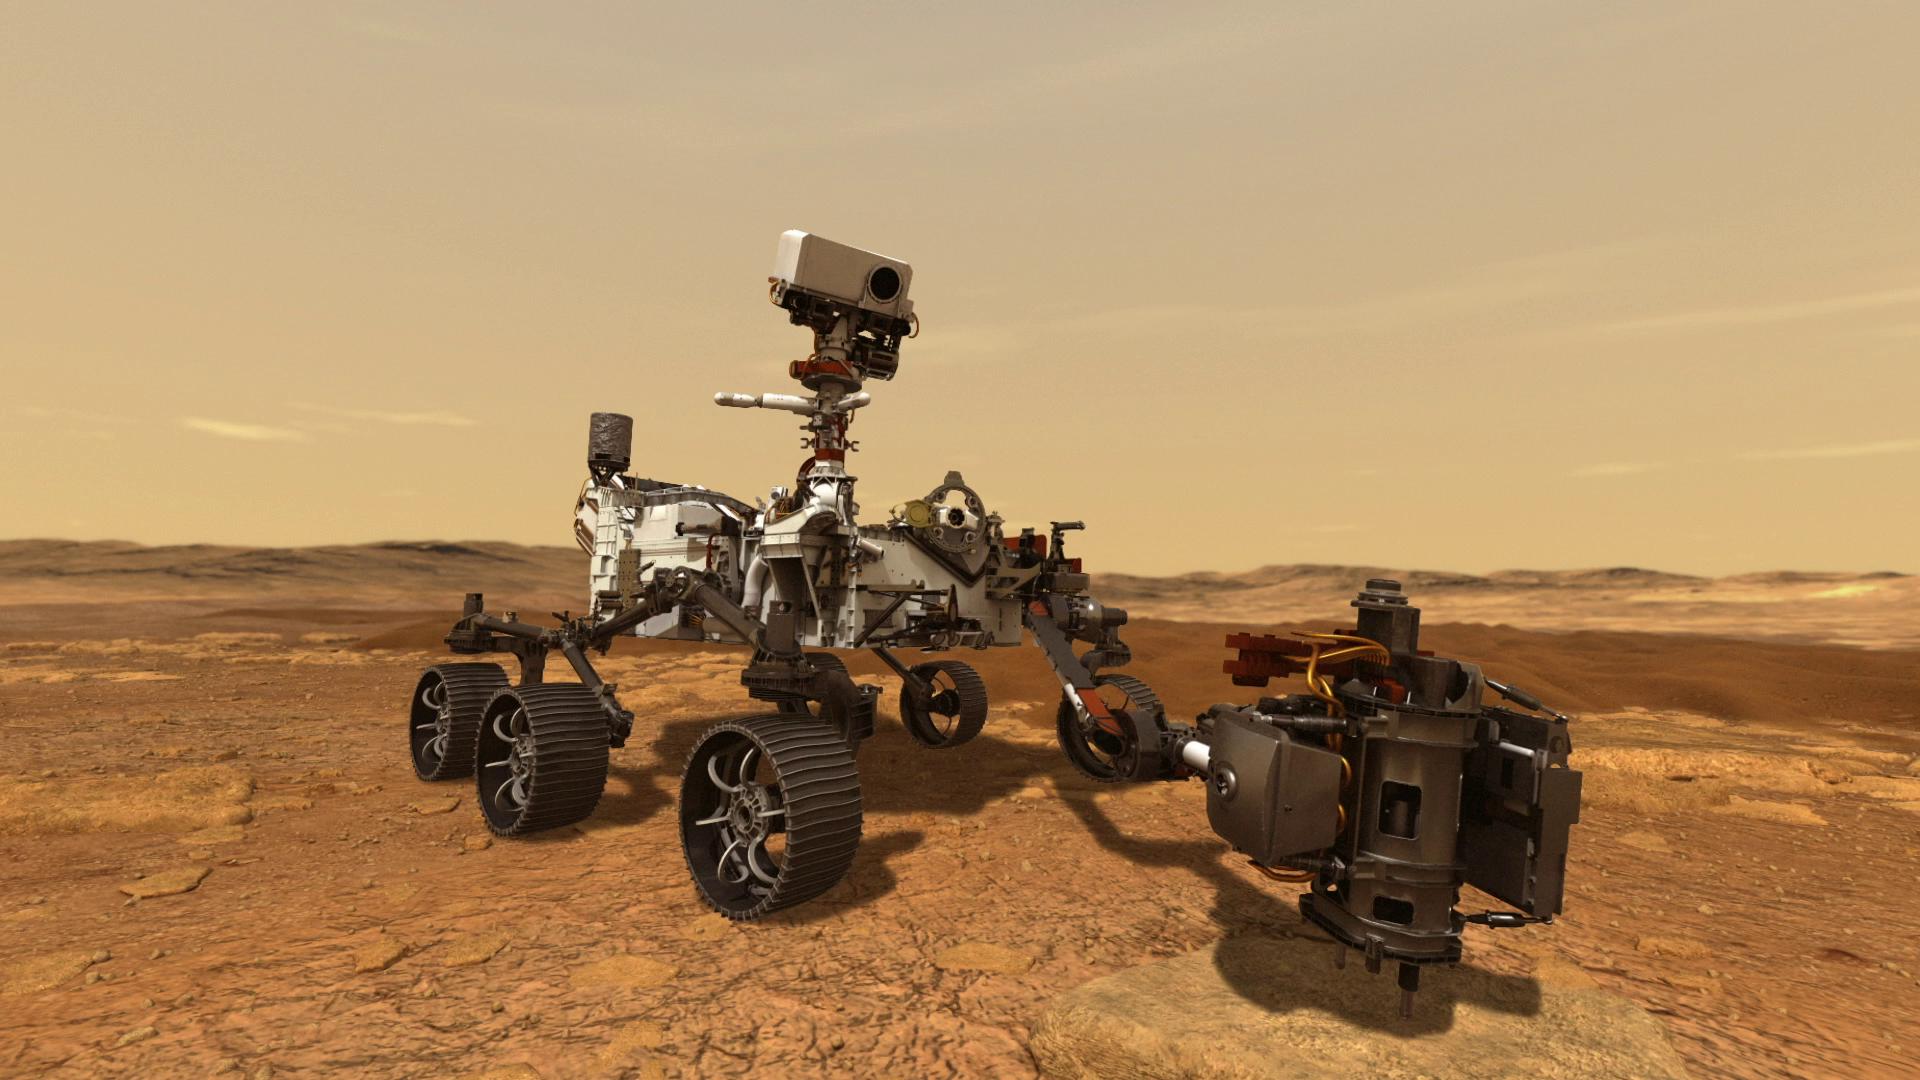 The Power of Witnessing the Landmark Perseverance Rover’s Landing